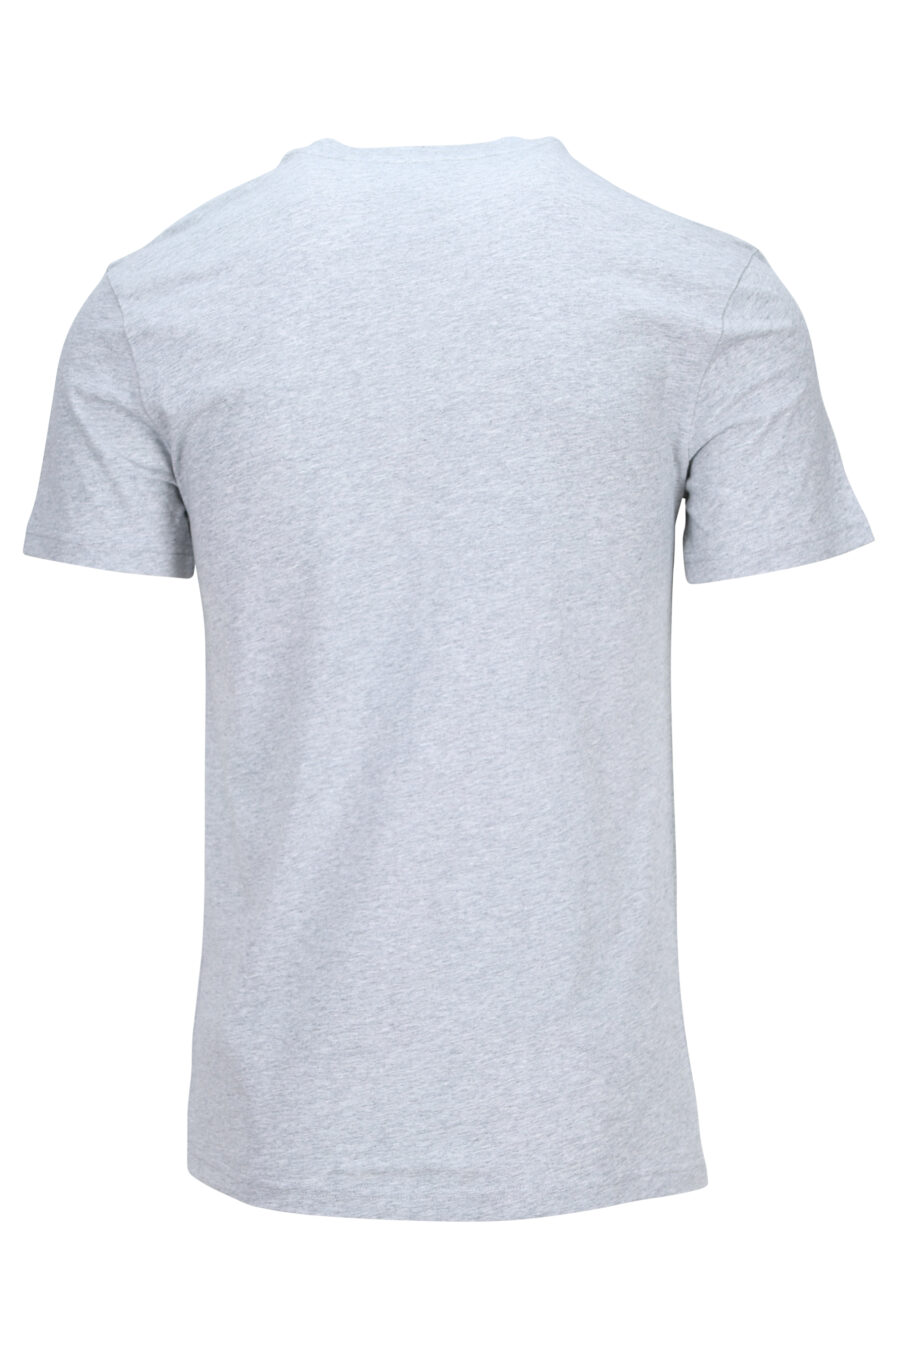 T-shirt gris avec maxilogue "couture milano" - 889316936414 1